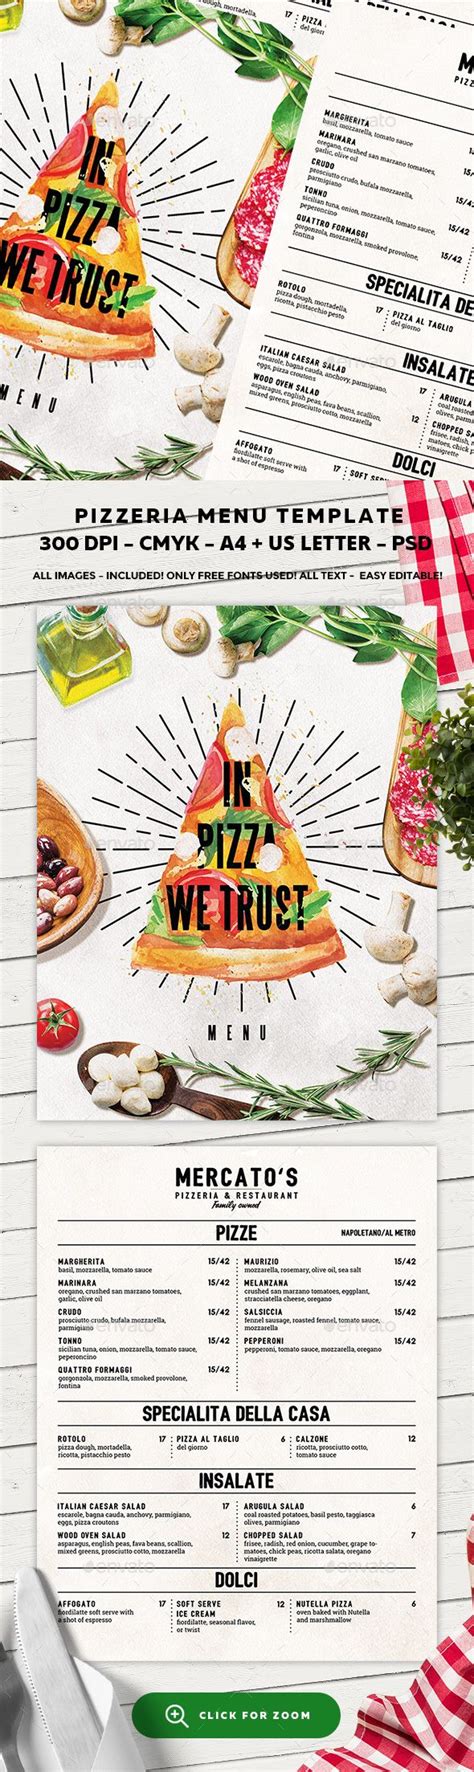 Best 25+ Pizza menu design ideas on Pinterest | Pizza menu ...